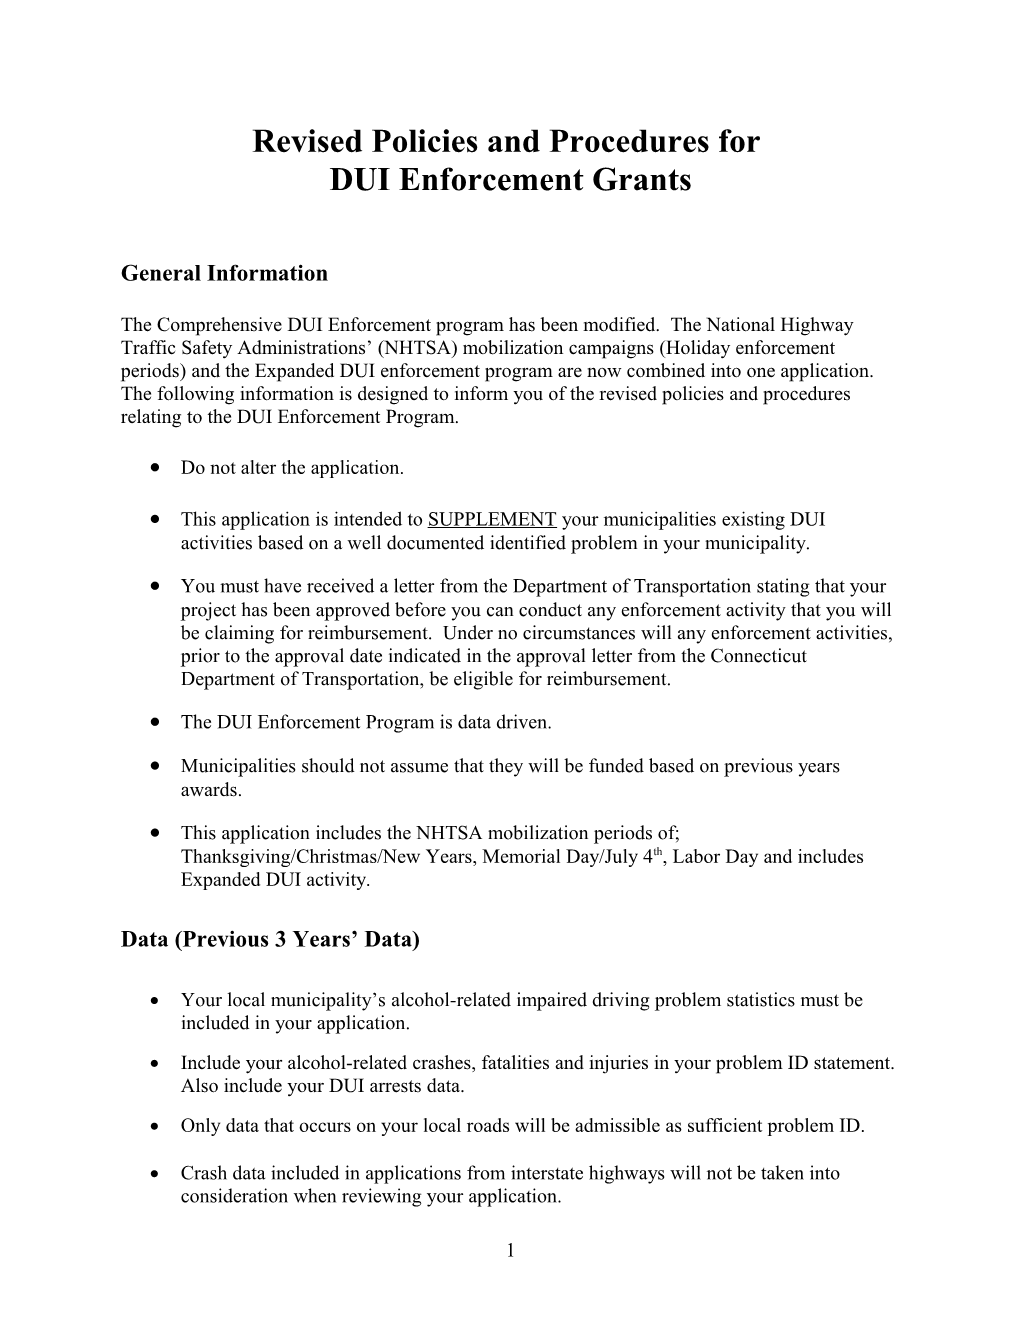 New Policies and Proceedures for Dui Enforcemnet Grants